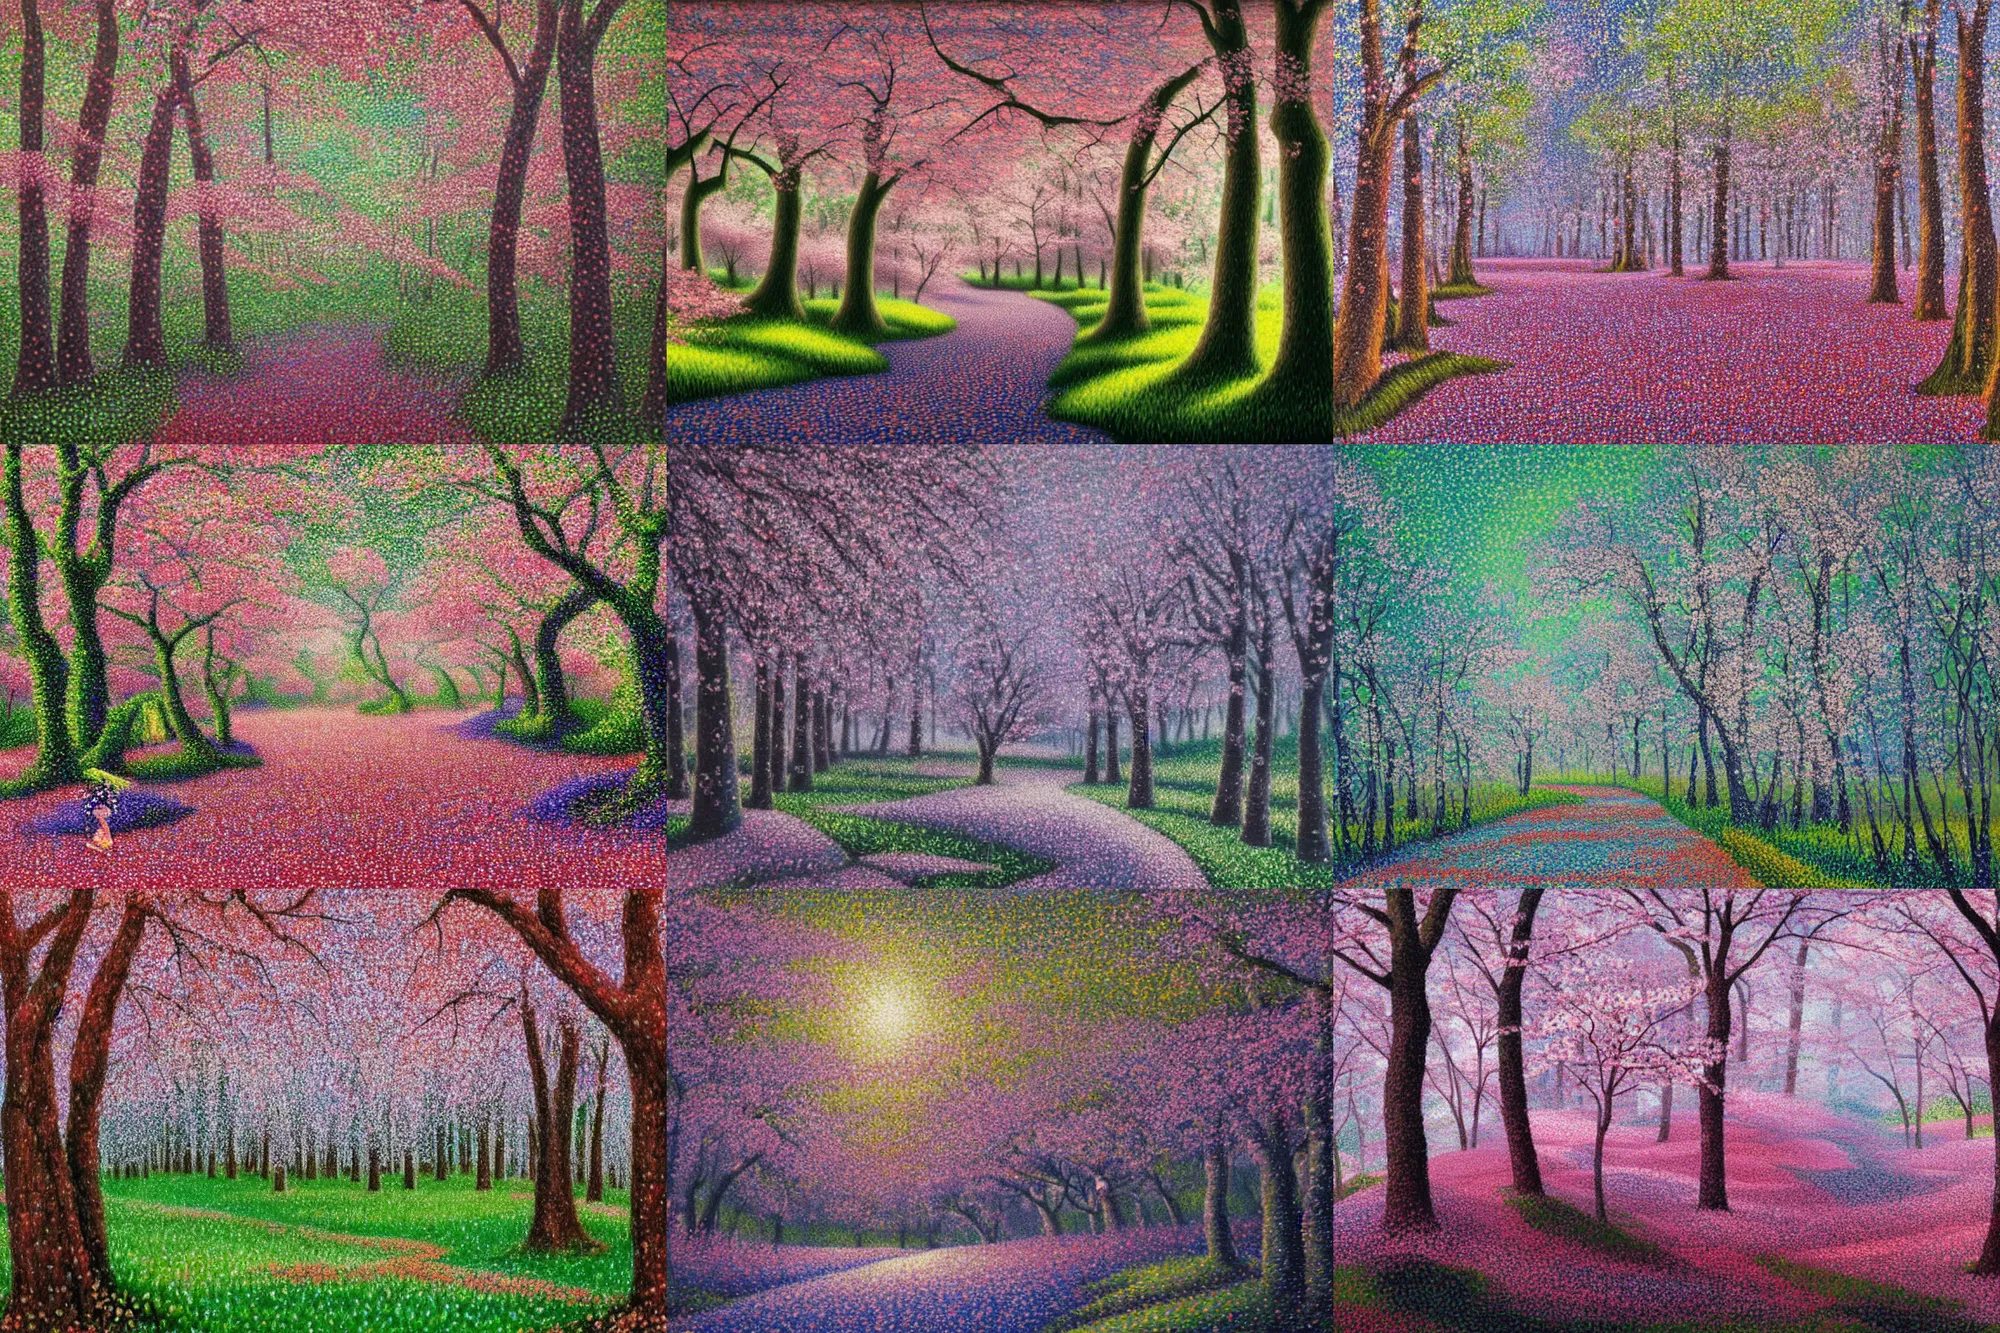 Prompt: Cherry blossom forest, high quality pointillism, award winning, trending on ArtStation